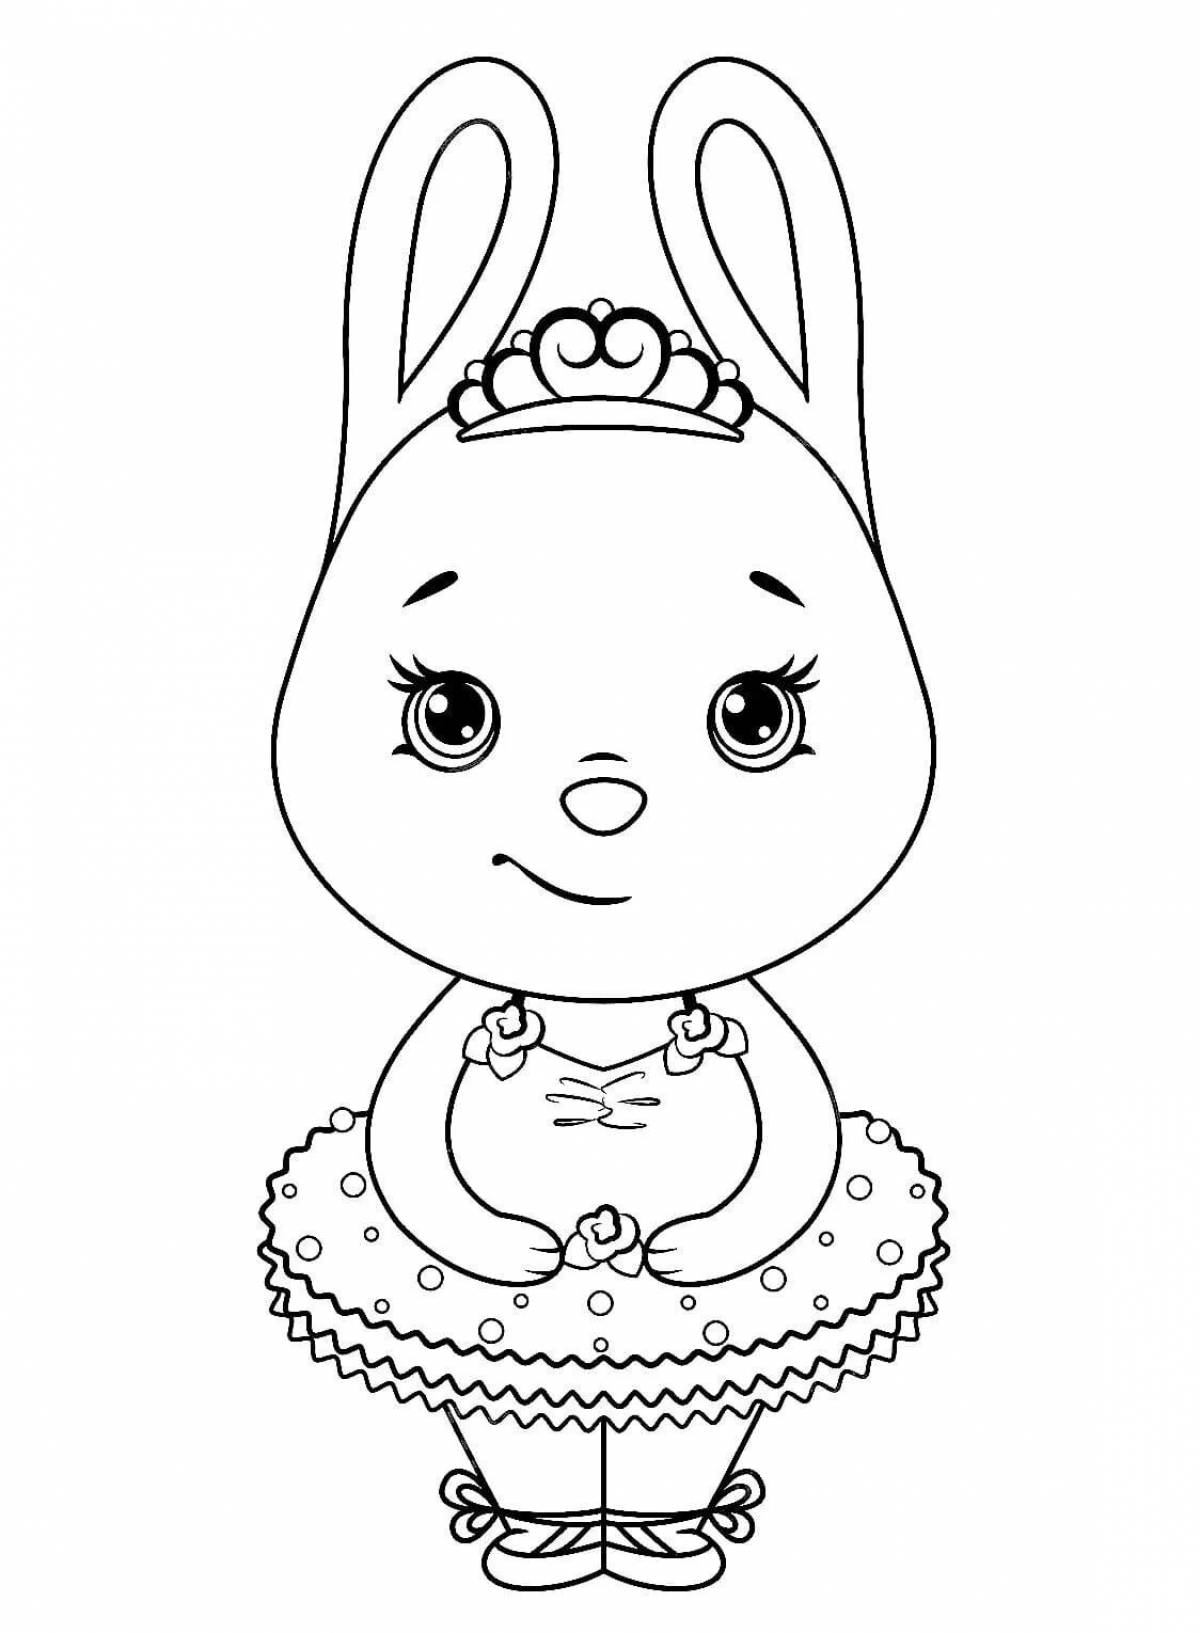 Nimble ballerina rabbit coloring page